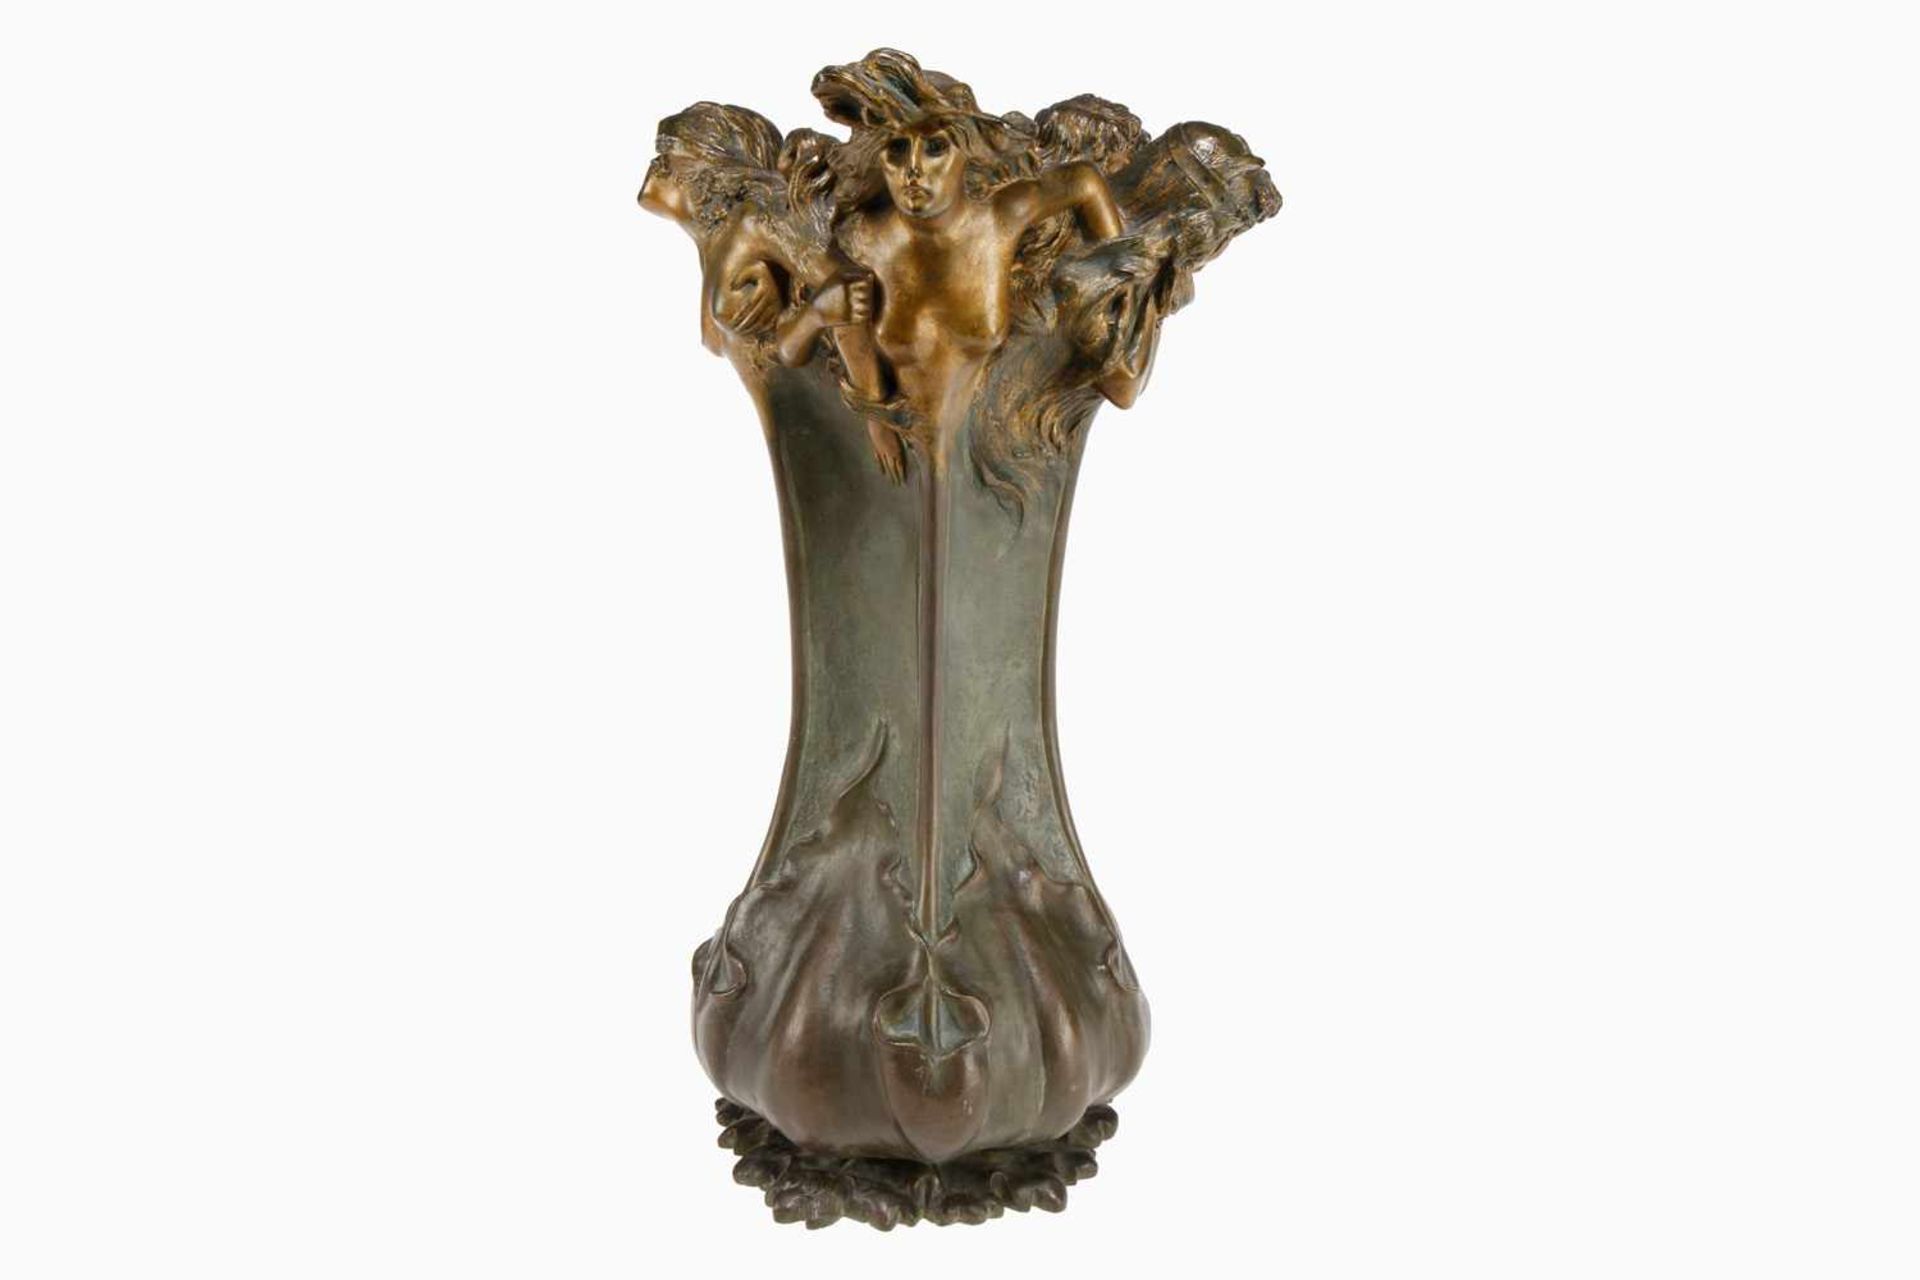 Vase "Le Desan" "Peyre 99", Raphael Charles Peyre 1872-1949, Jugendstilvase, Guss, patiniert mit